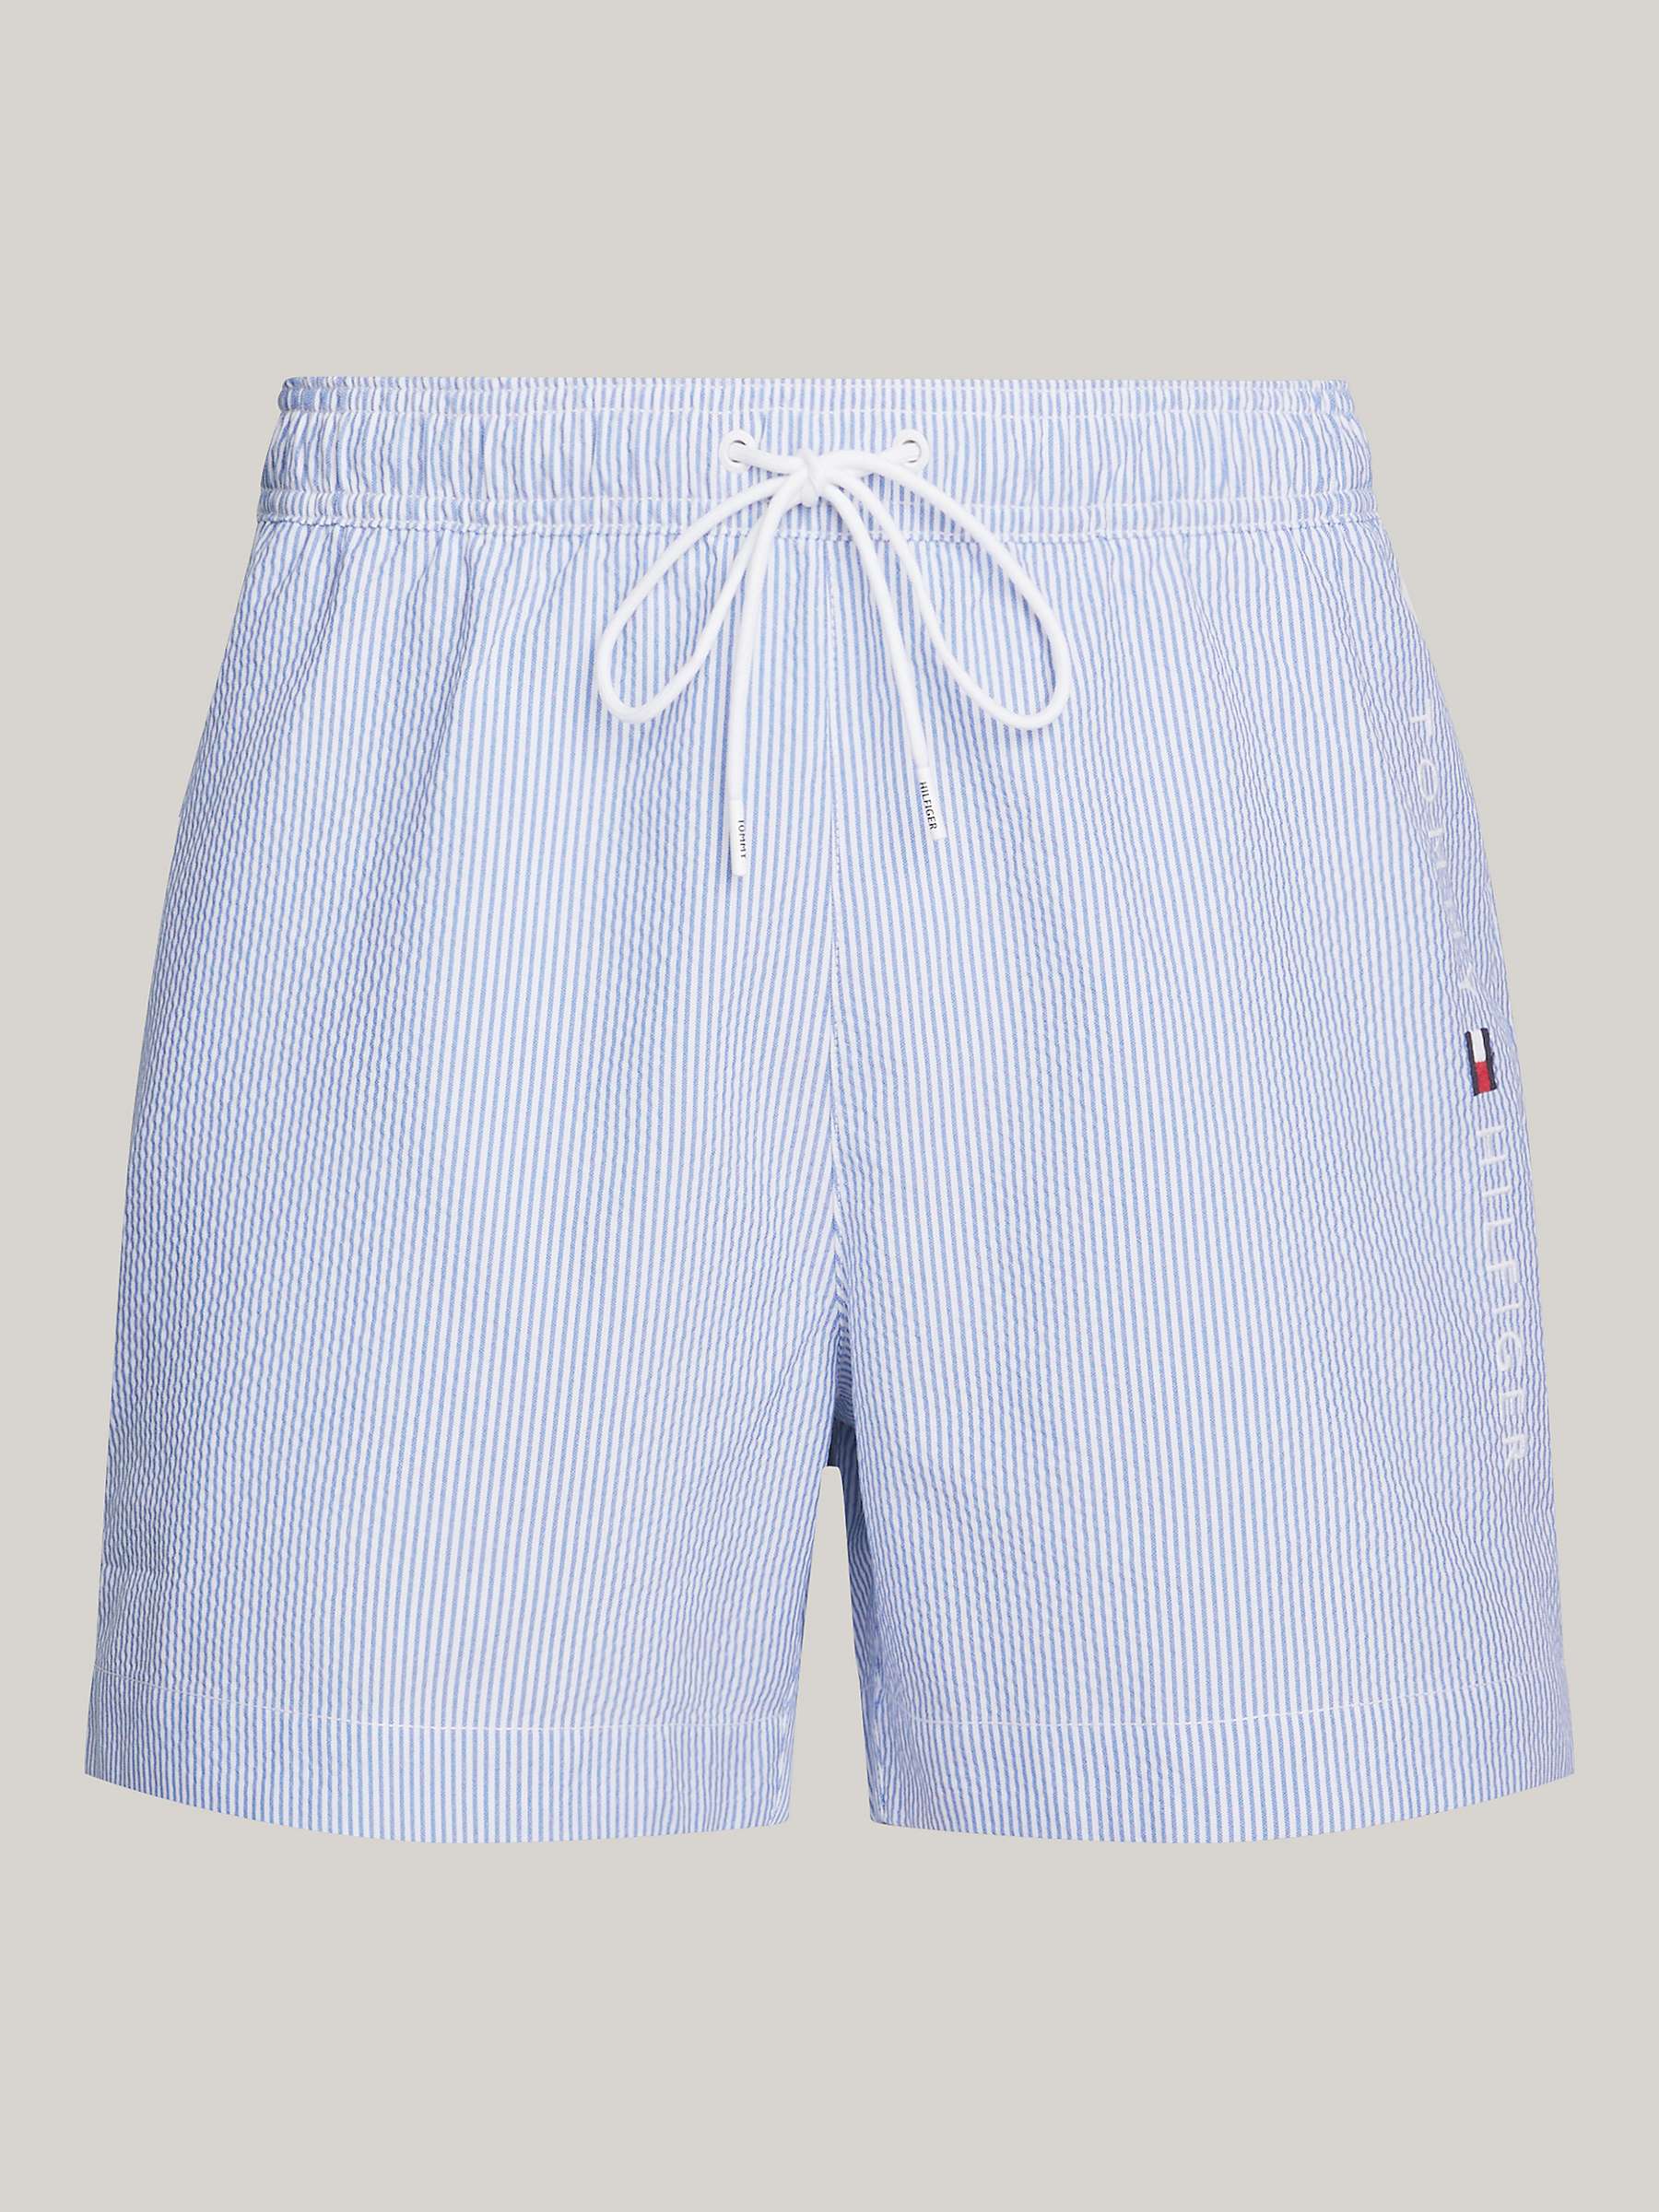 Buy Tommy Hilfiger Pinstripe Swim Shorts, White/Blue Online at johnlewis.com